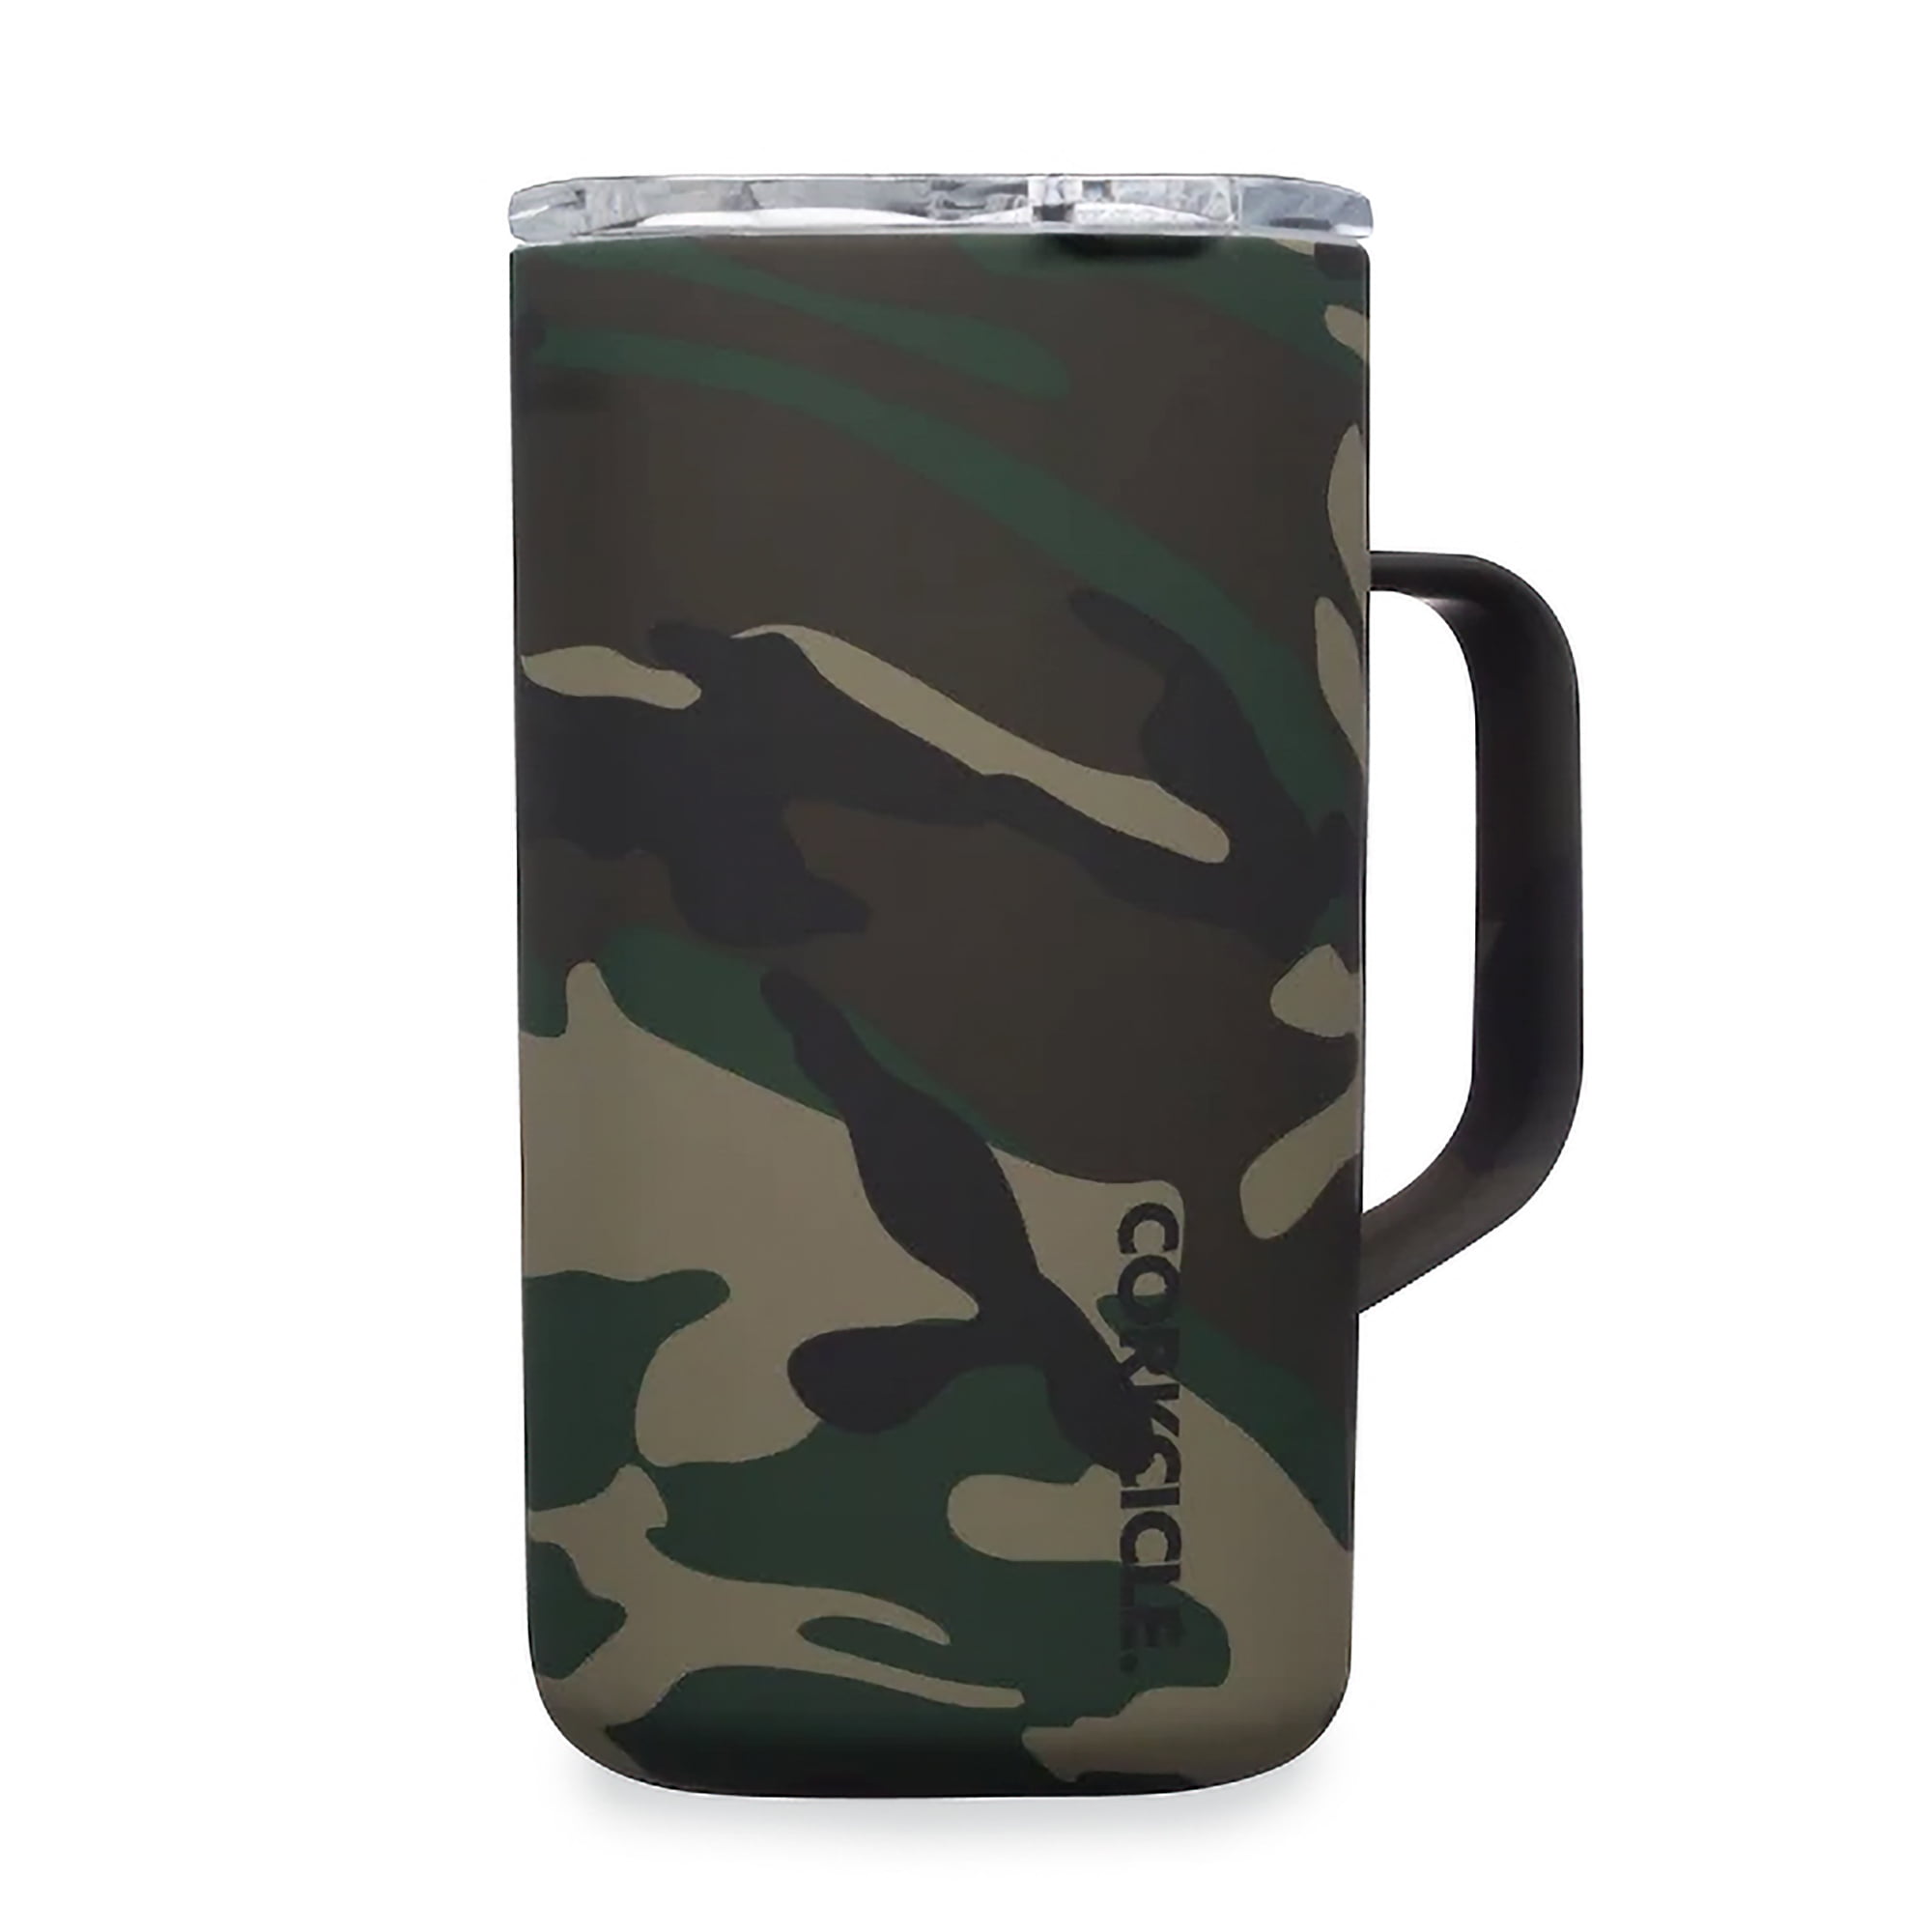  Color Banded Classic Coffee Cup - Camo - 16 oz. 111150-CAMO